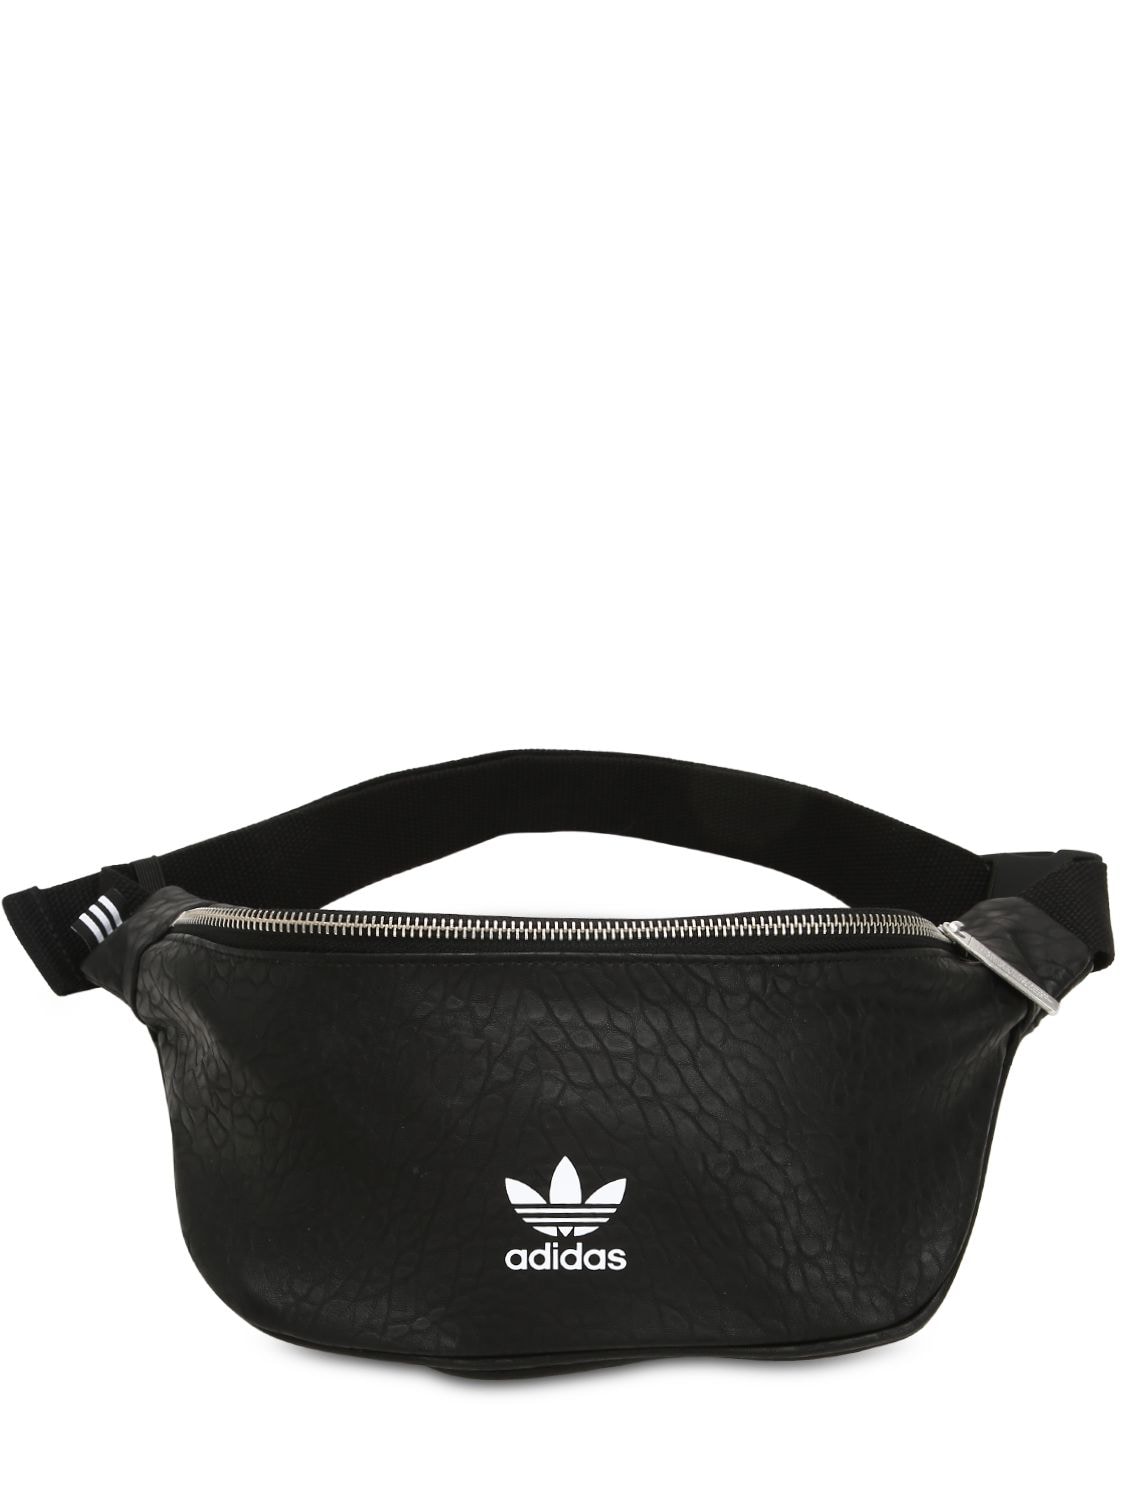 Adidas Originals Faux Leather Belt Pack In Black